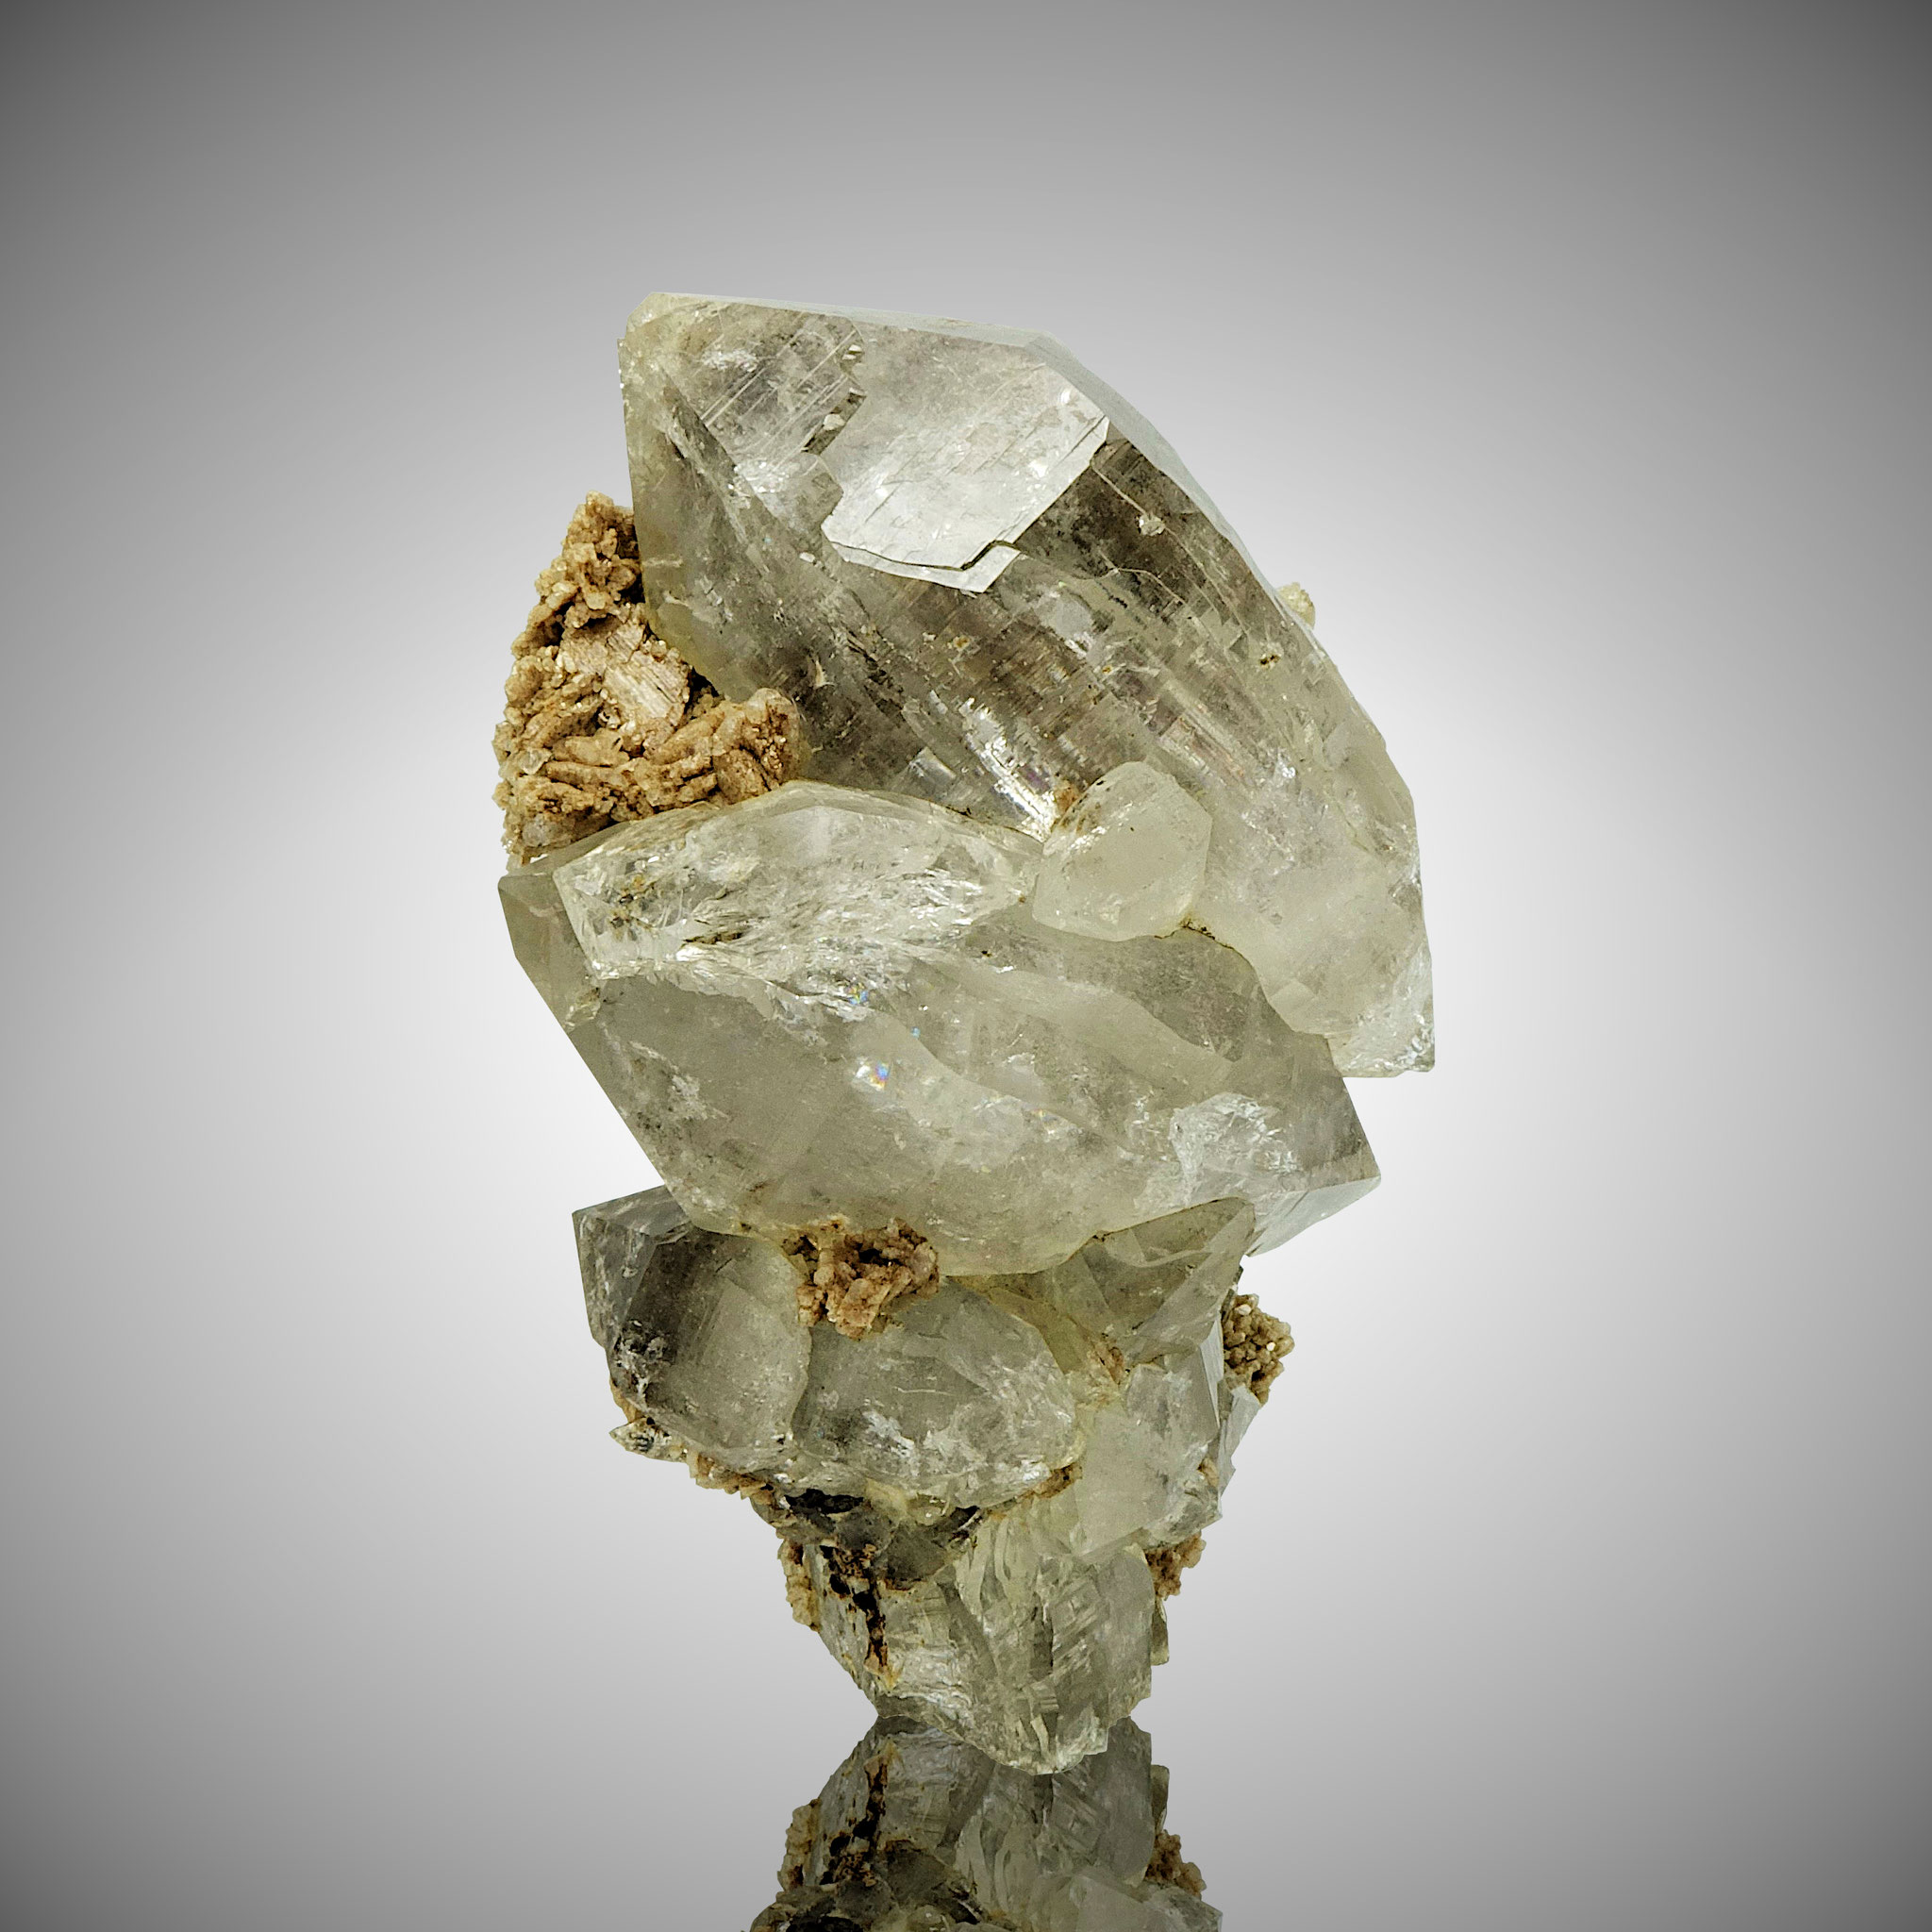 Bergkristall/Albit/Pyrit, "Ameliekluft" Lungau 2015, 14 x 9,5 x 7,5 cm